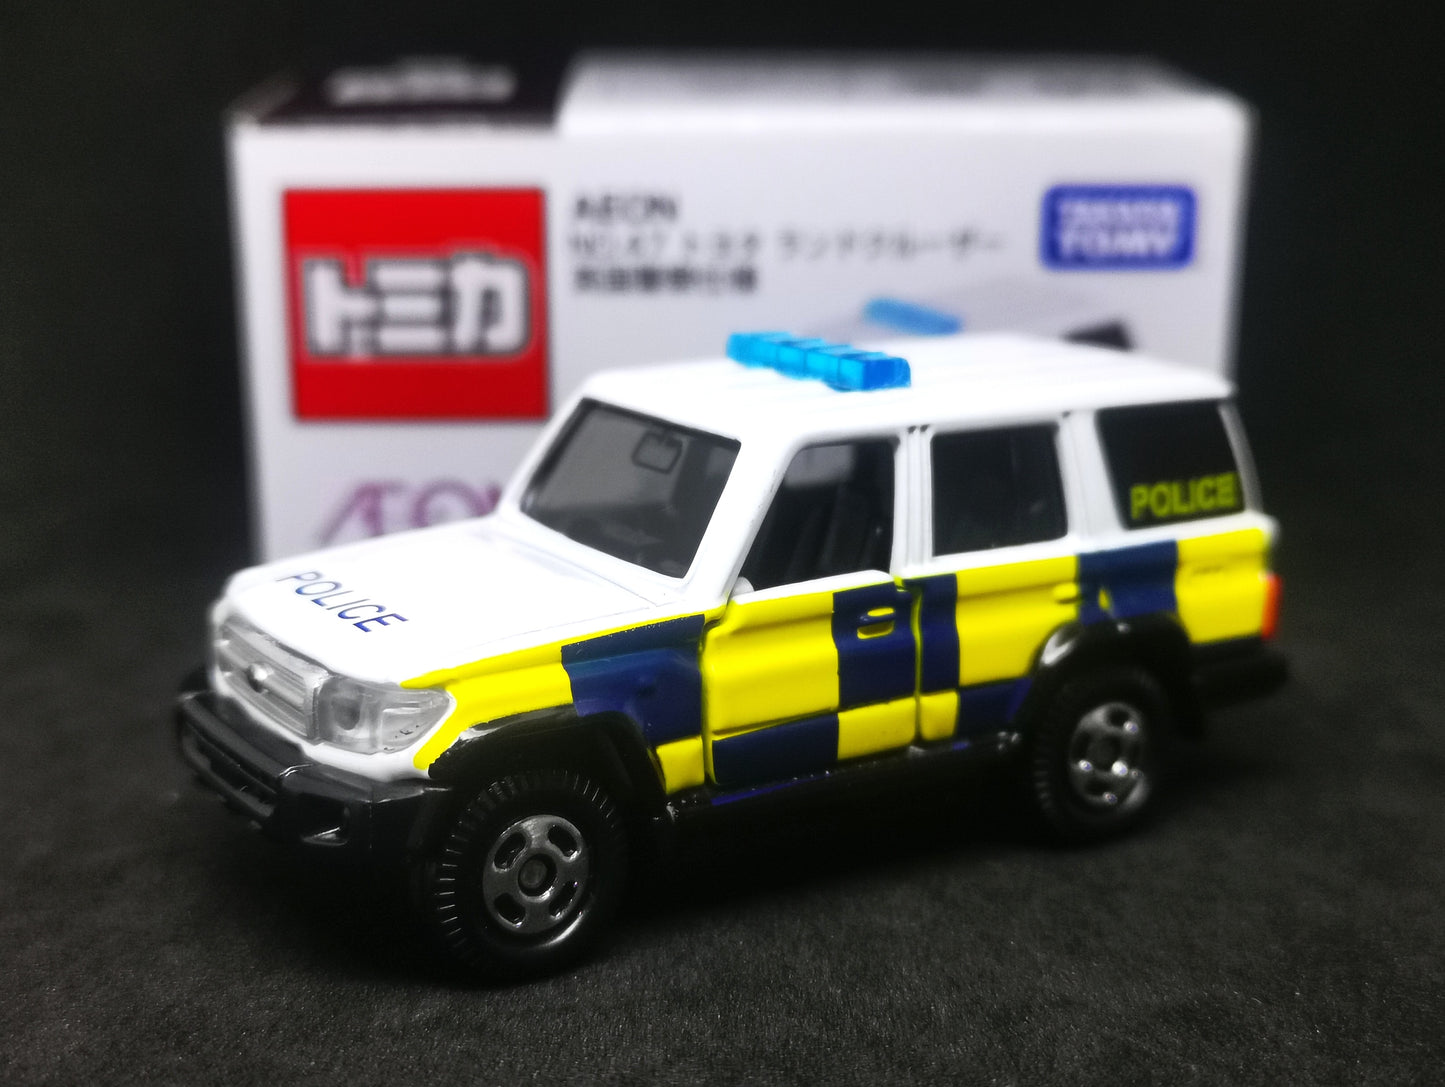 Tomica Aeon Mall Exclusive Toyota Land Cruiser British Patrol Car Takara Tomy